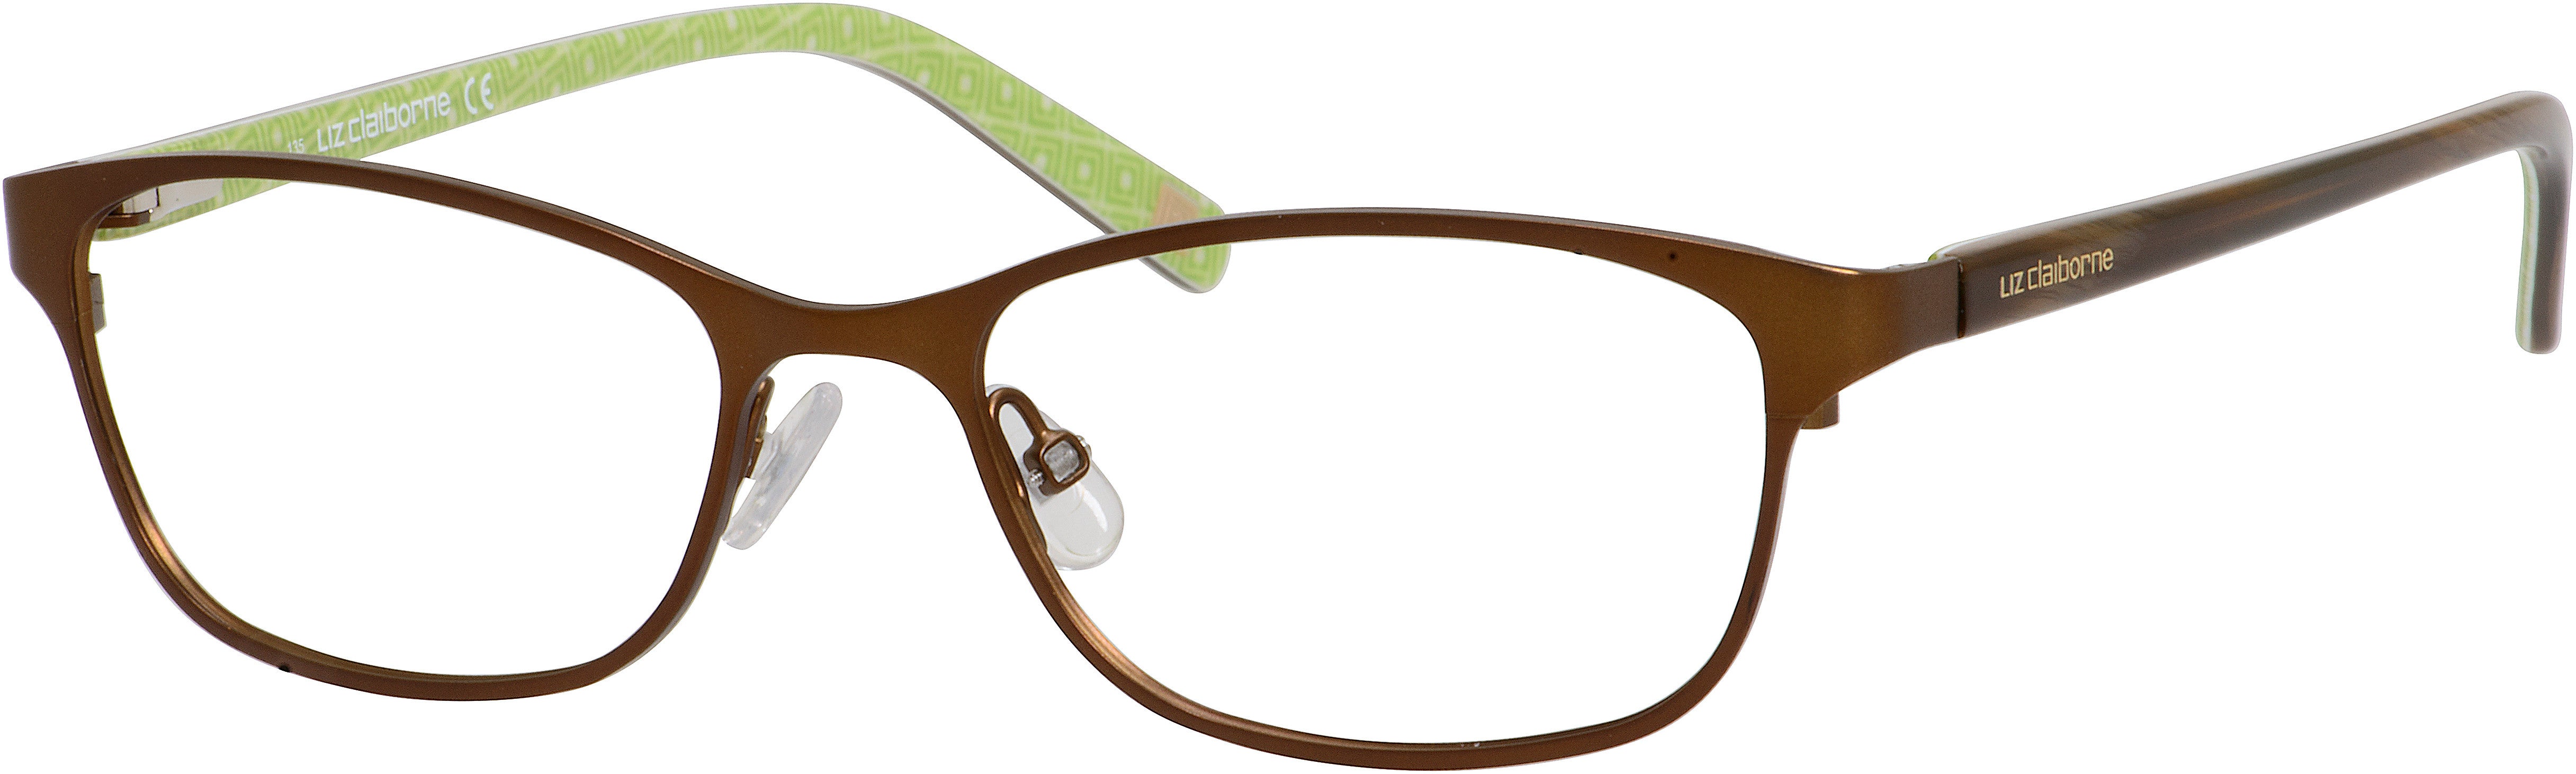  Liz Claiborne 425 Rectangular Eyeglasses 0RH9-0RH9  Brown (00 Demo Lens)